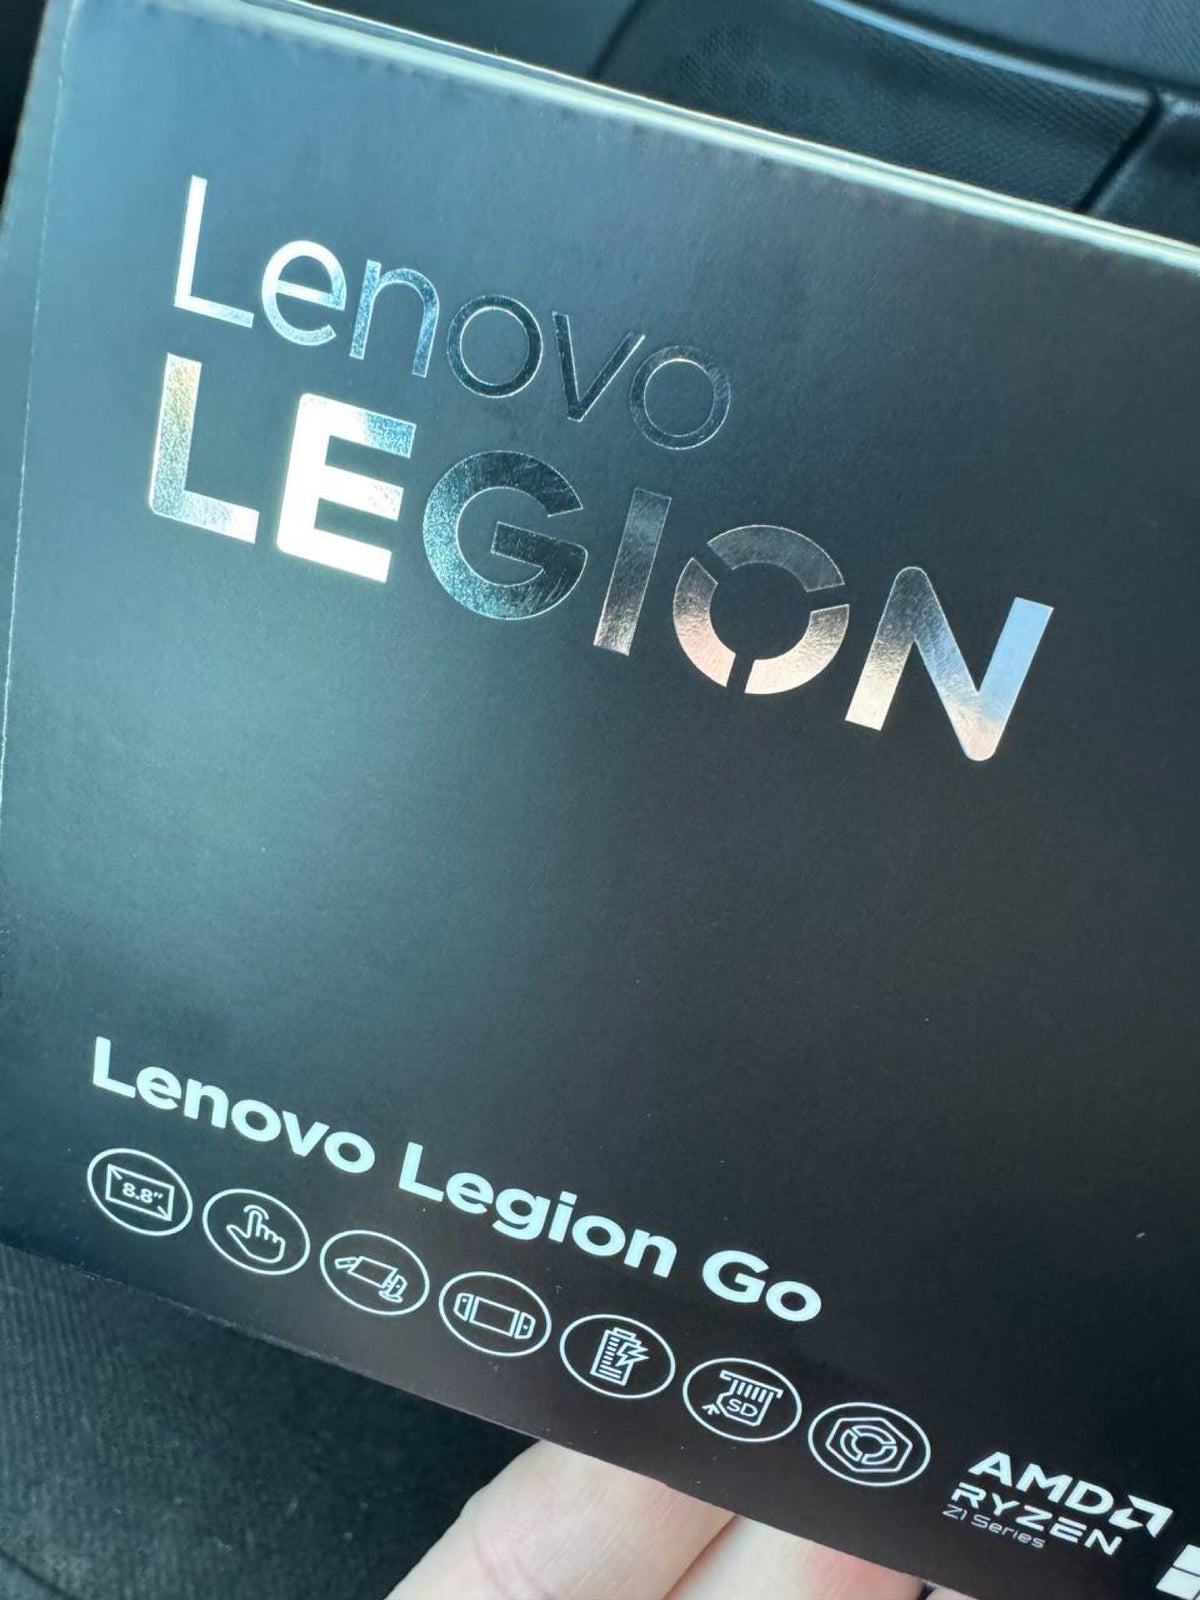 Lenovo Legion GO, Z1 extreme GHz, 16 GB GB ram